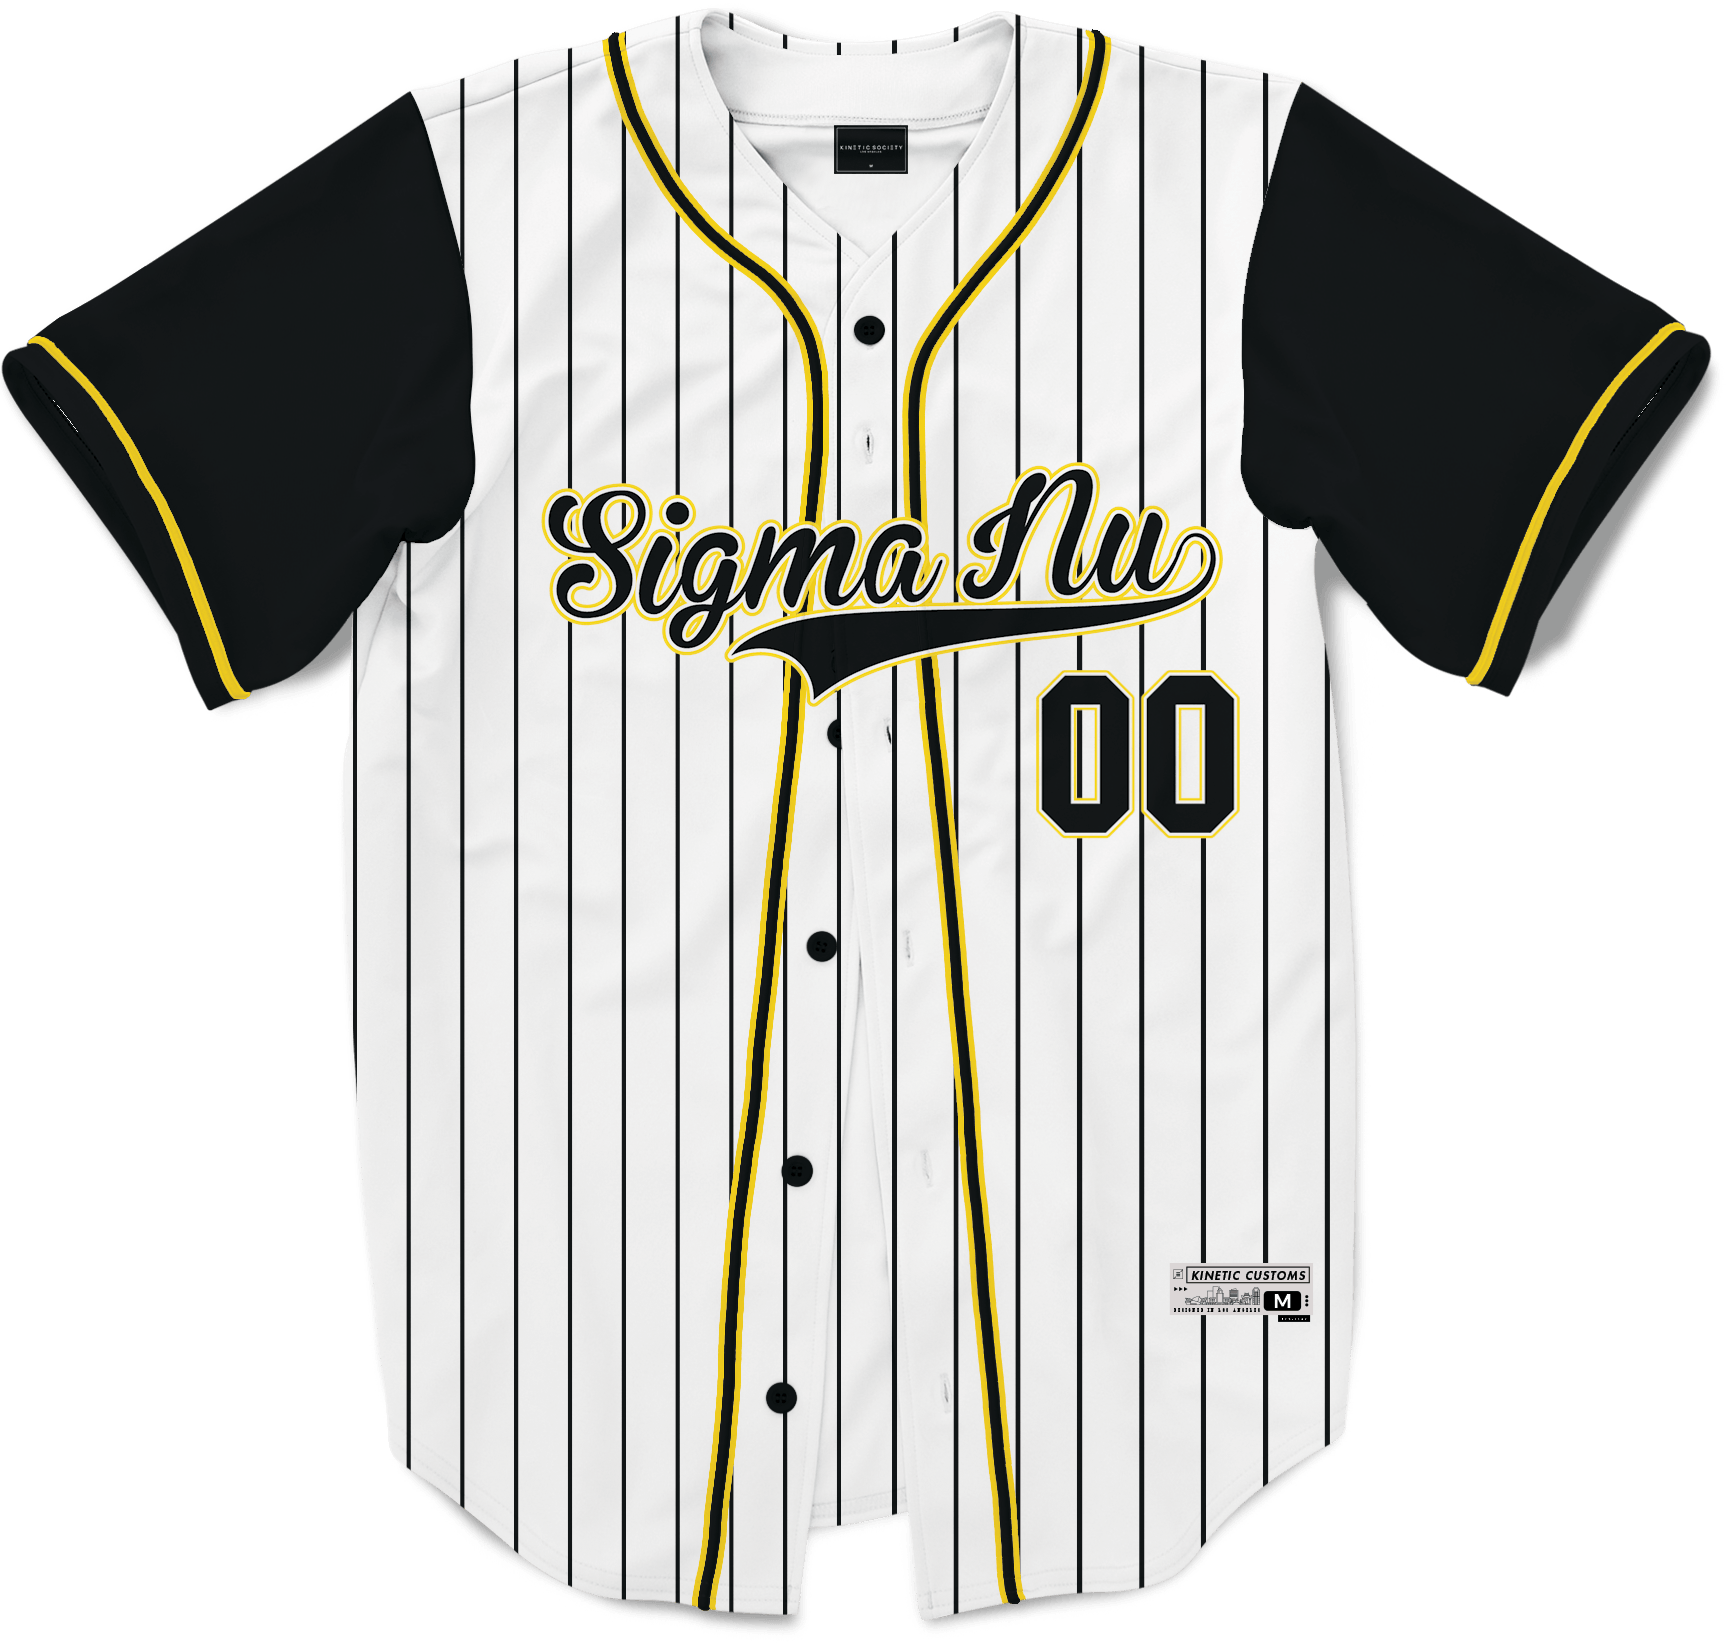 Sigma Nu - House Baseball Jersey - Kinetic Society